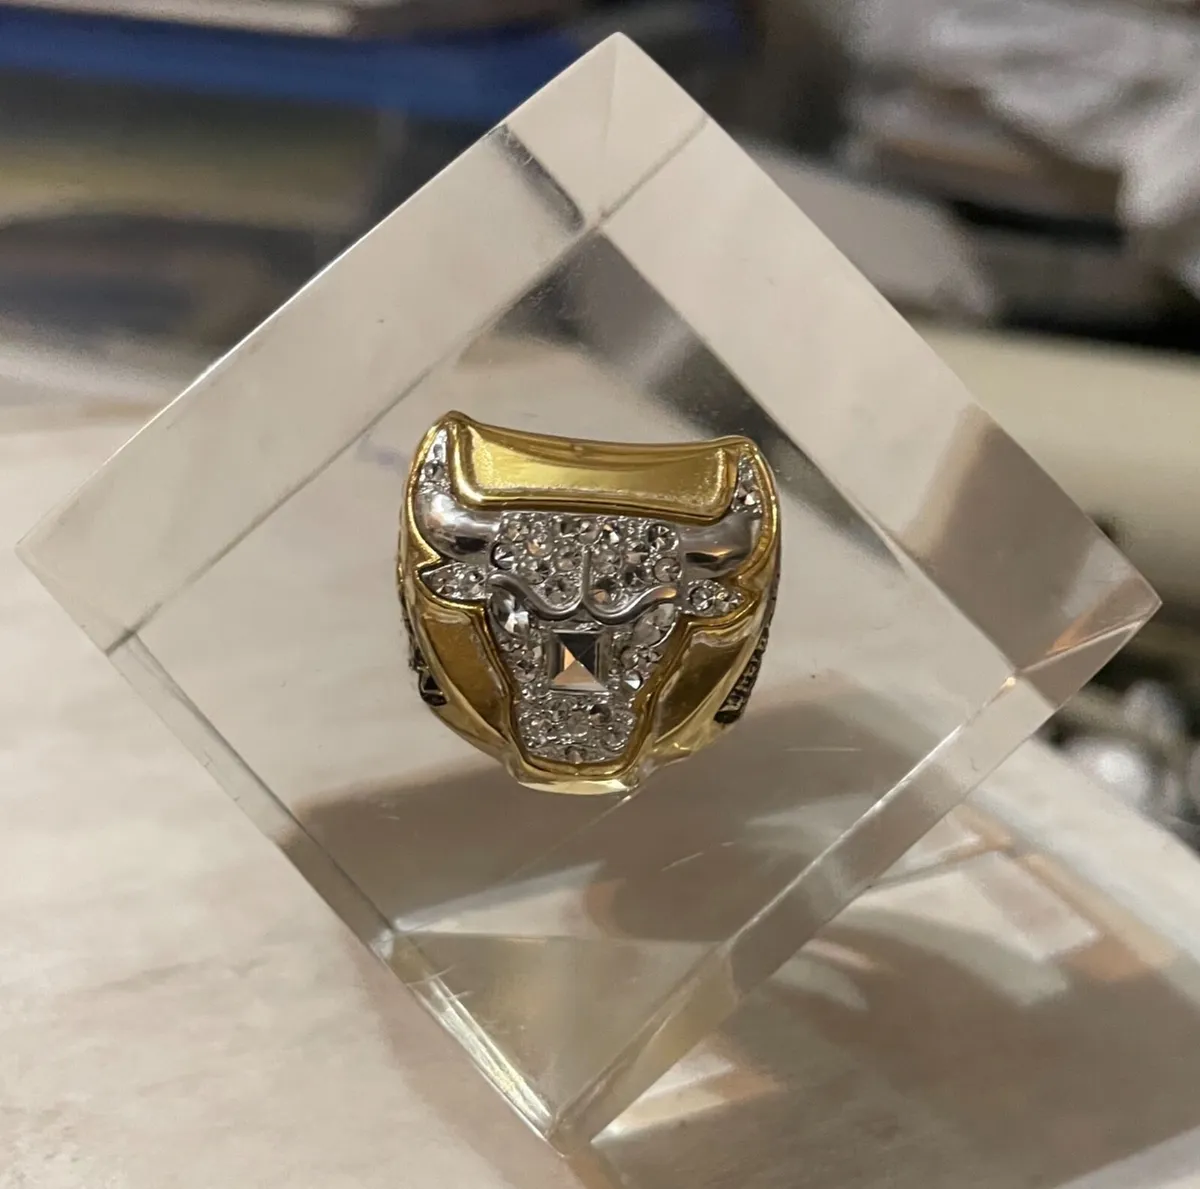 Sold at Auction: Michael Jordan Replica Championship Ring Set Memorabilia